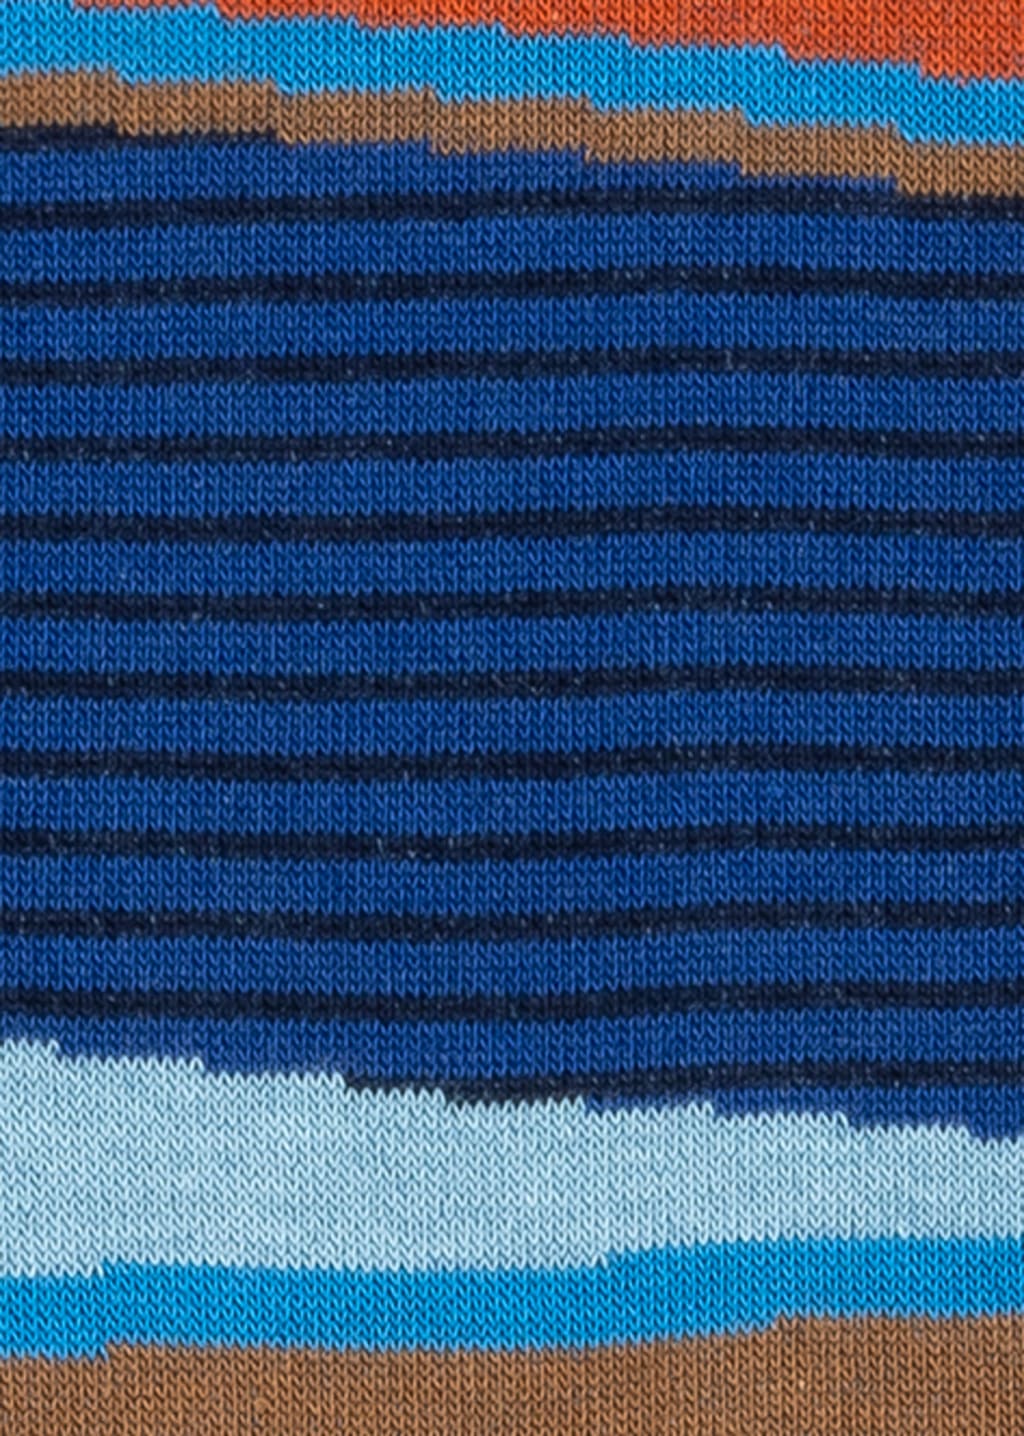 Detail View - Blue 'Plains' Stripe Socks Paul Smith